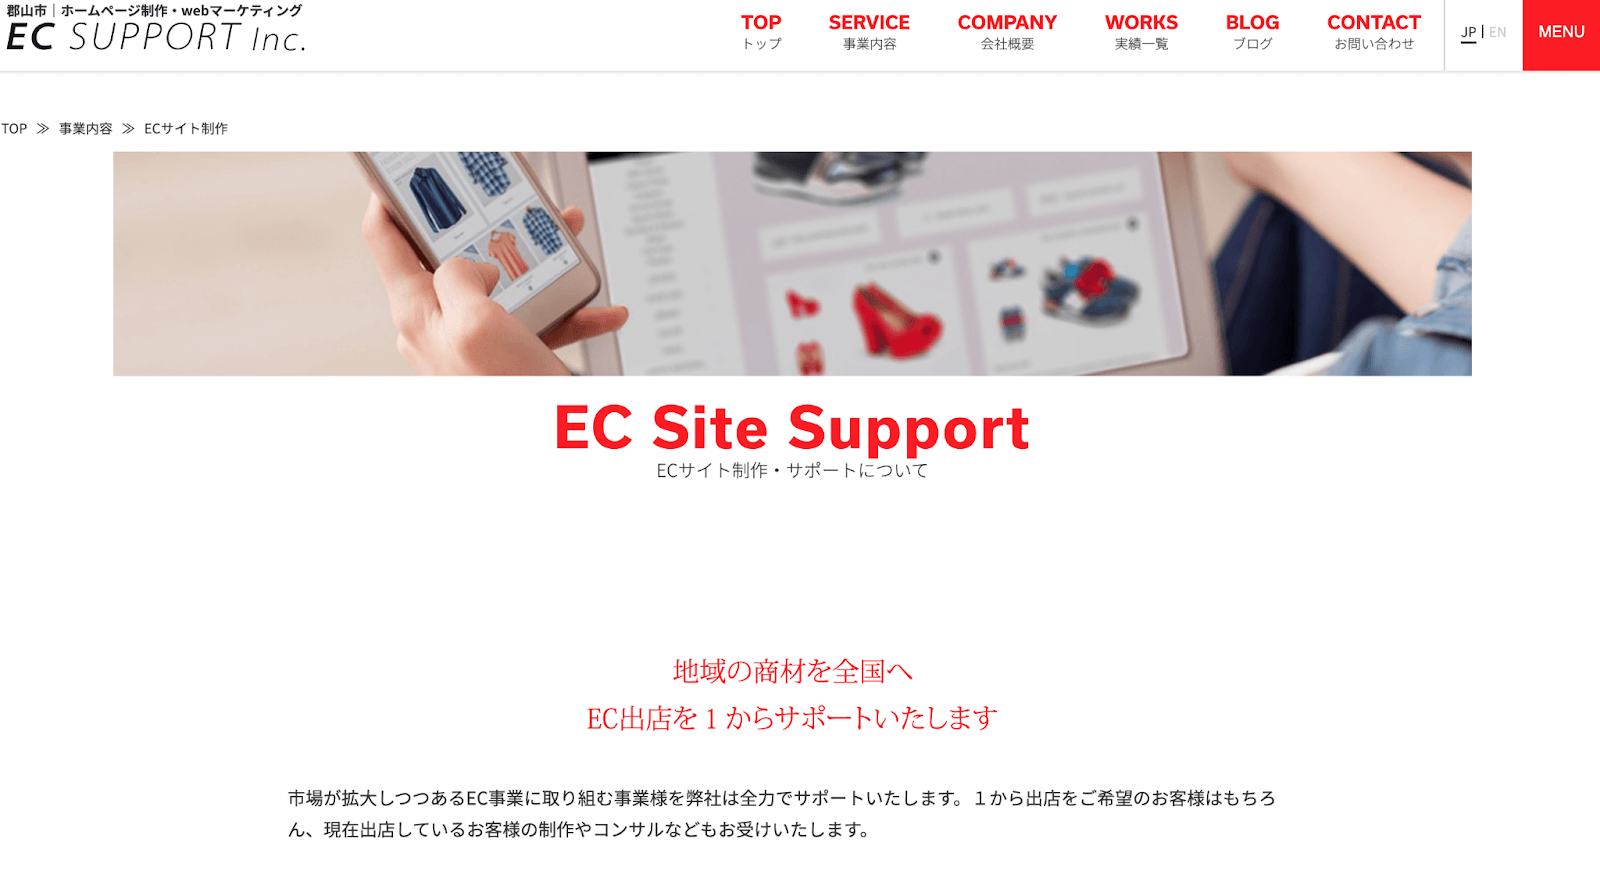 ECサポート株式会社のHP